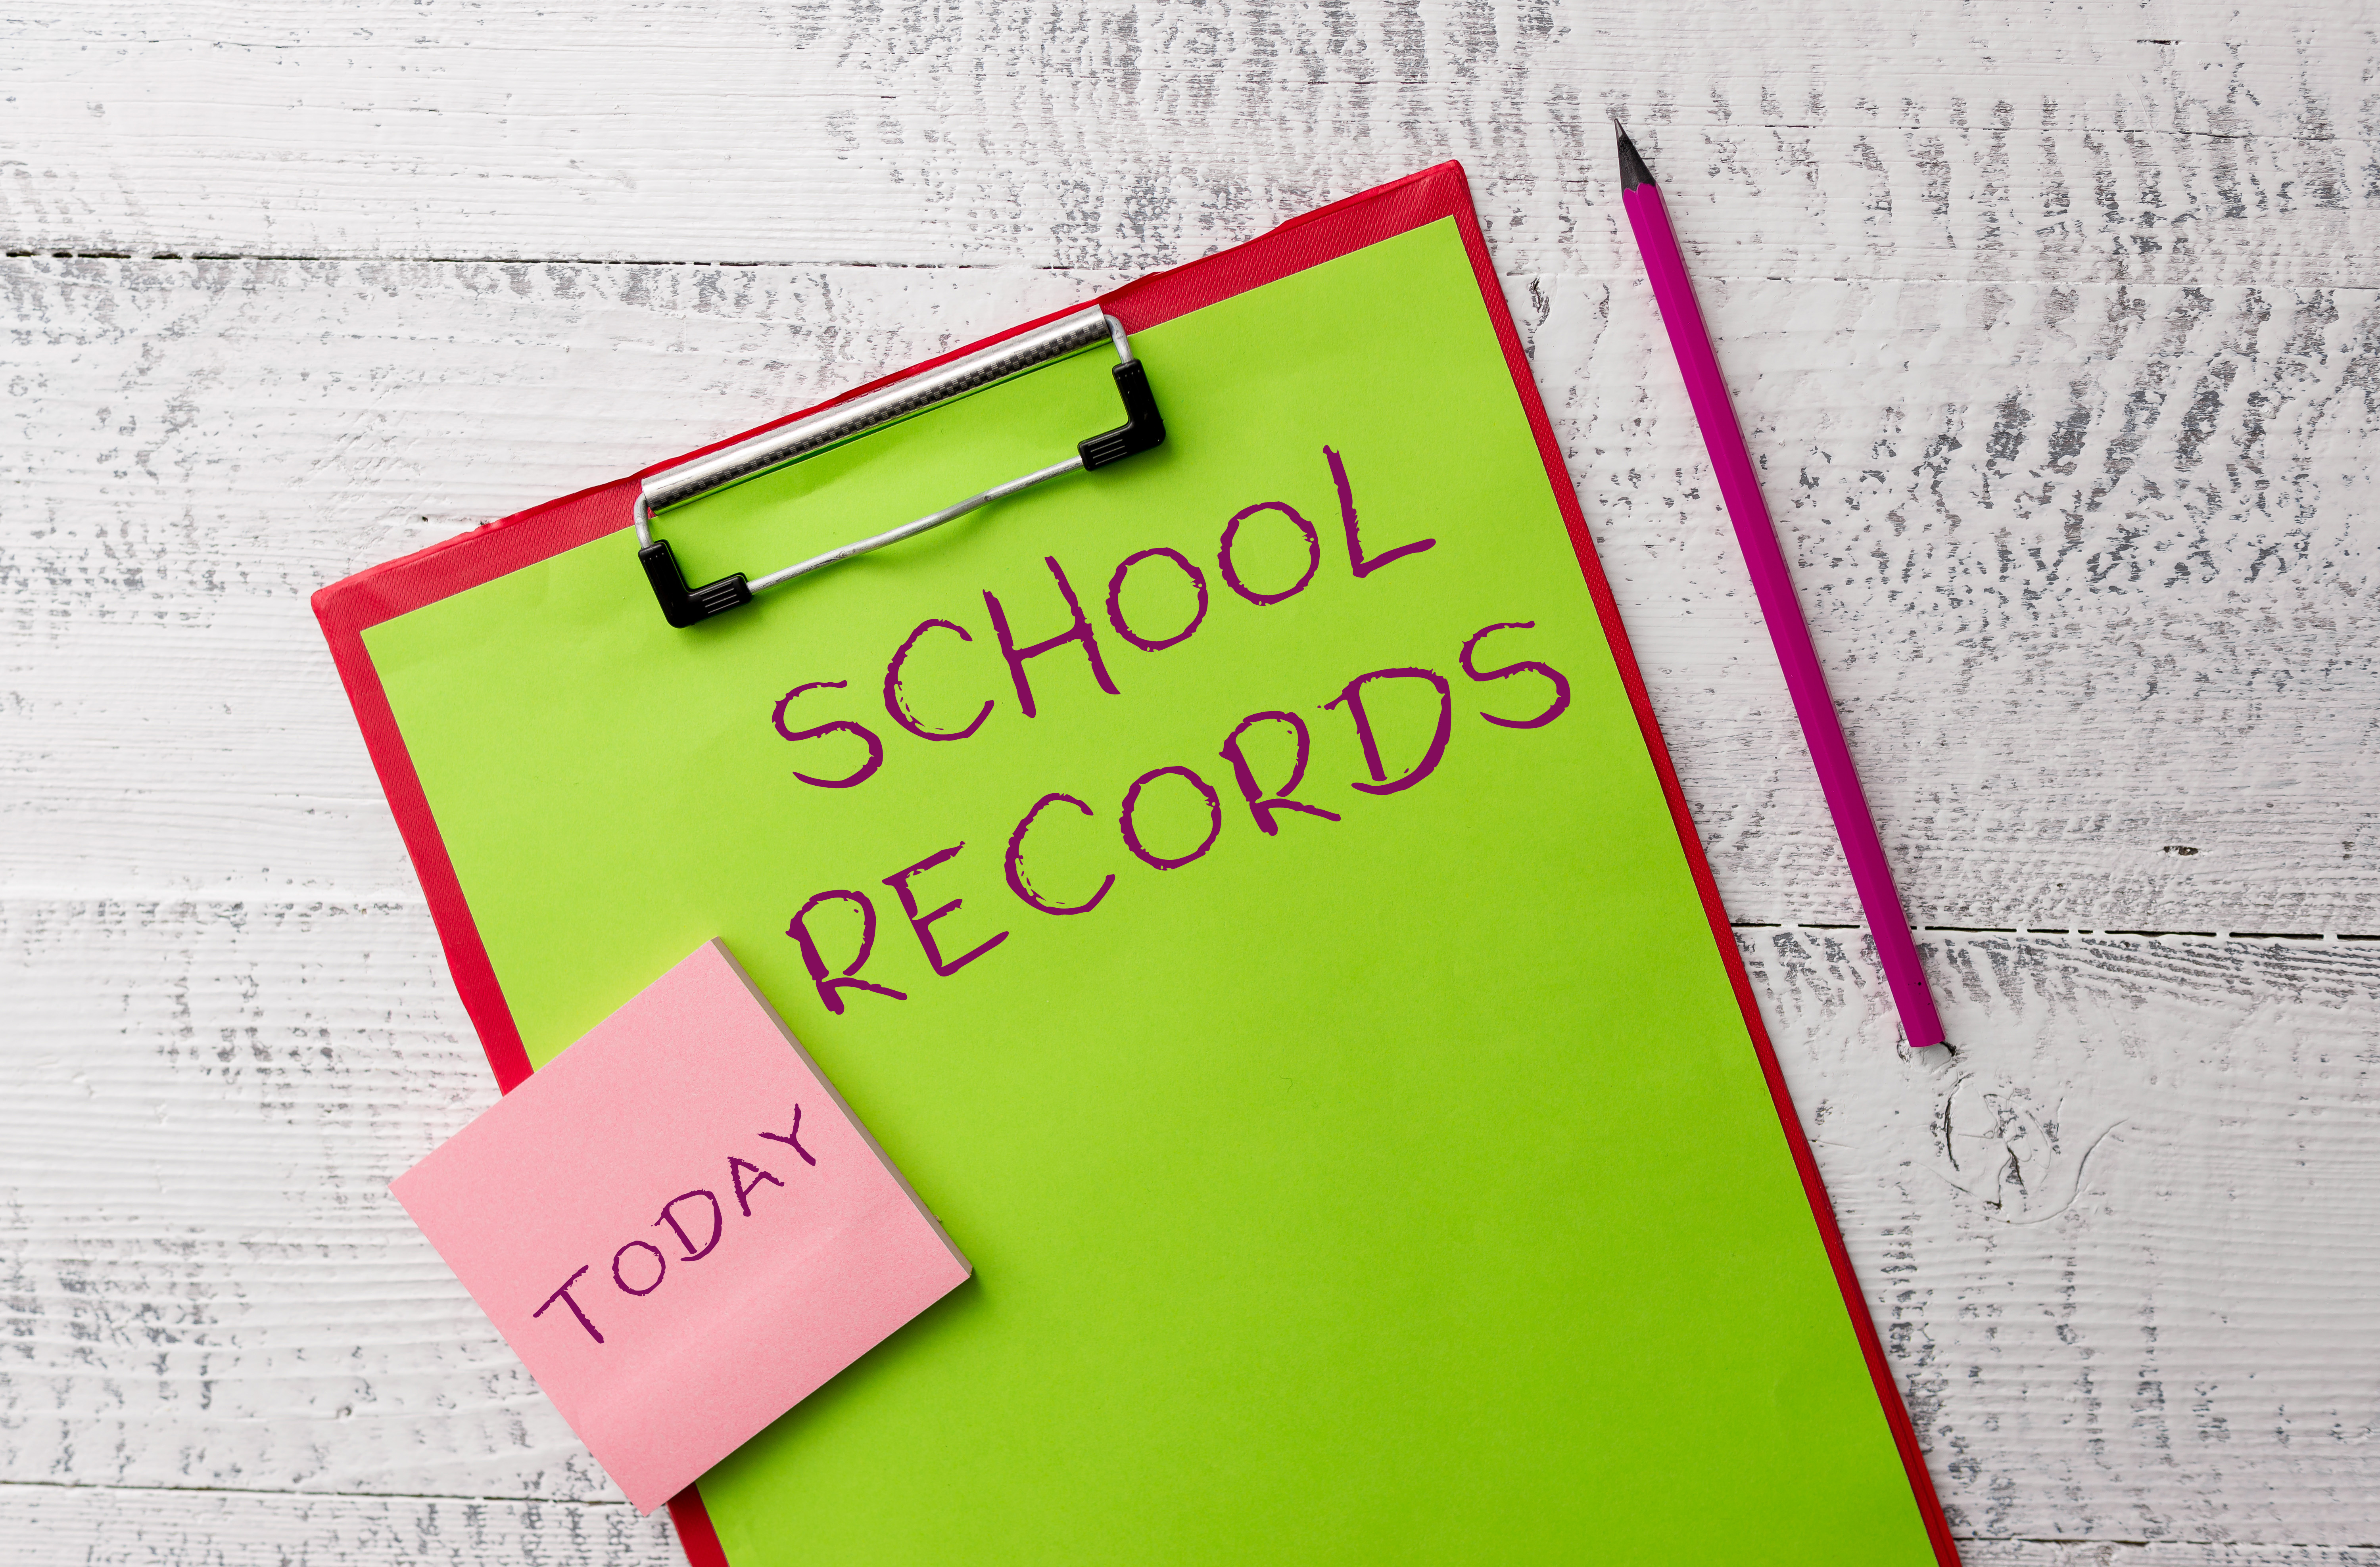 school records